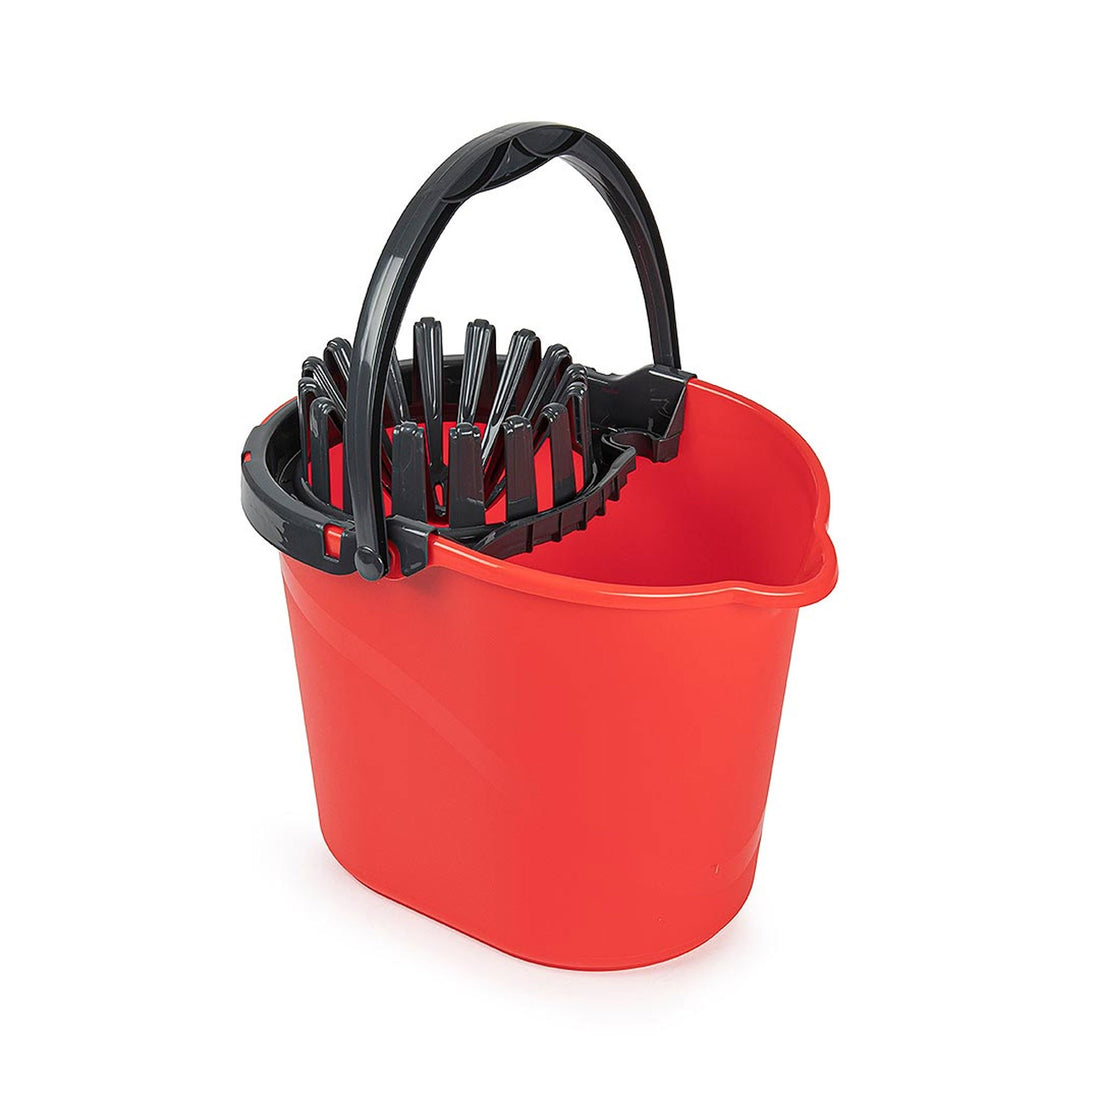 Easy-Drain Mop Bucket